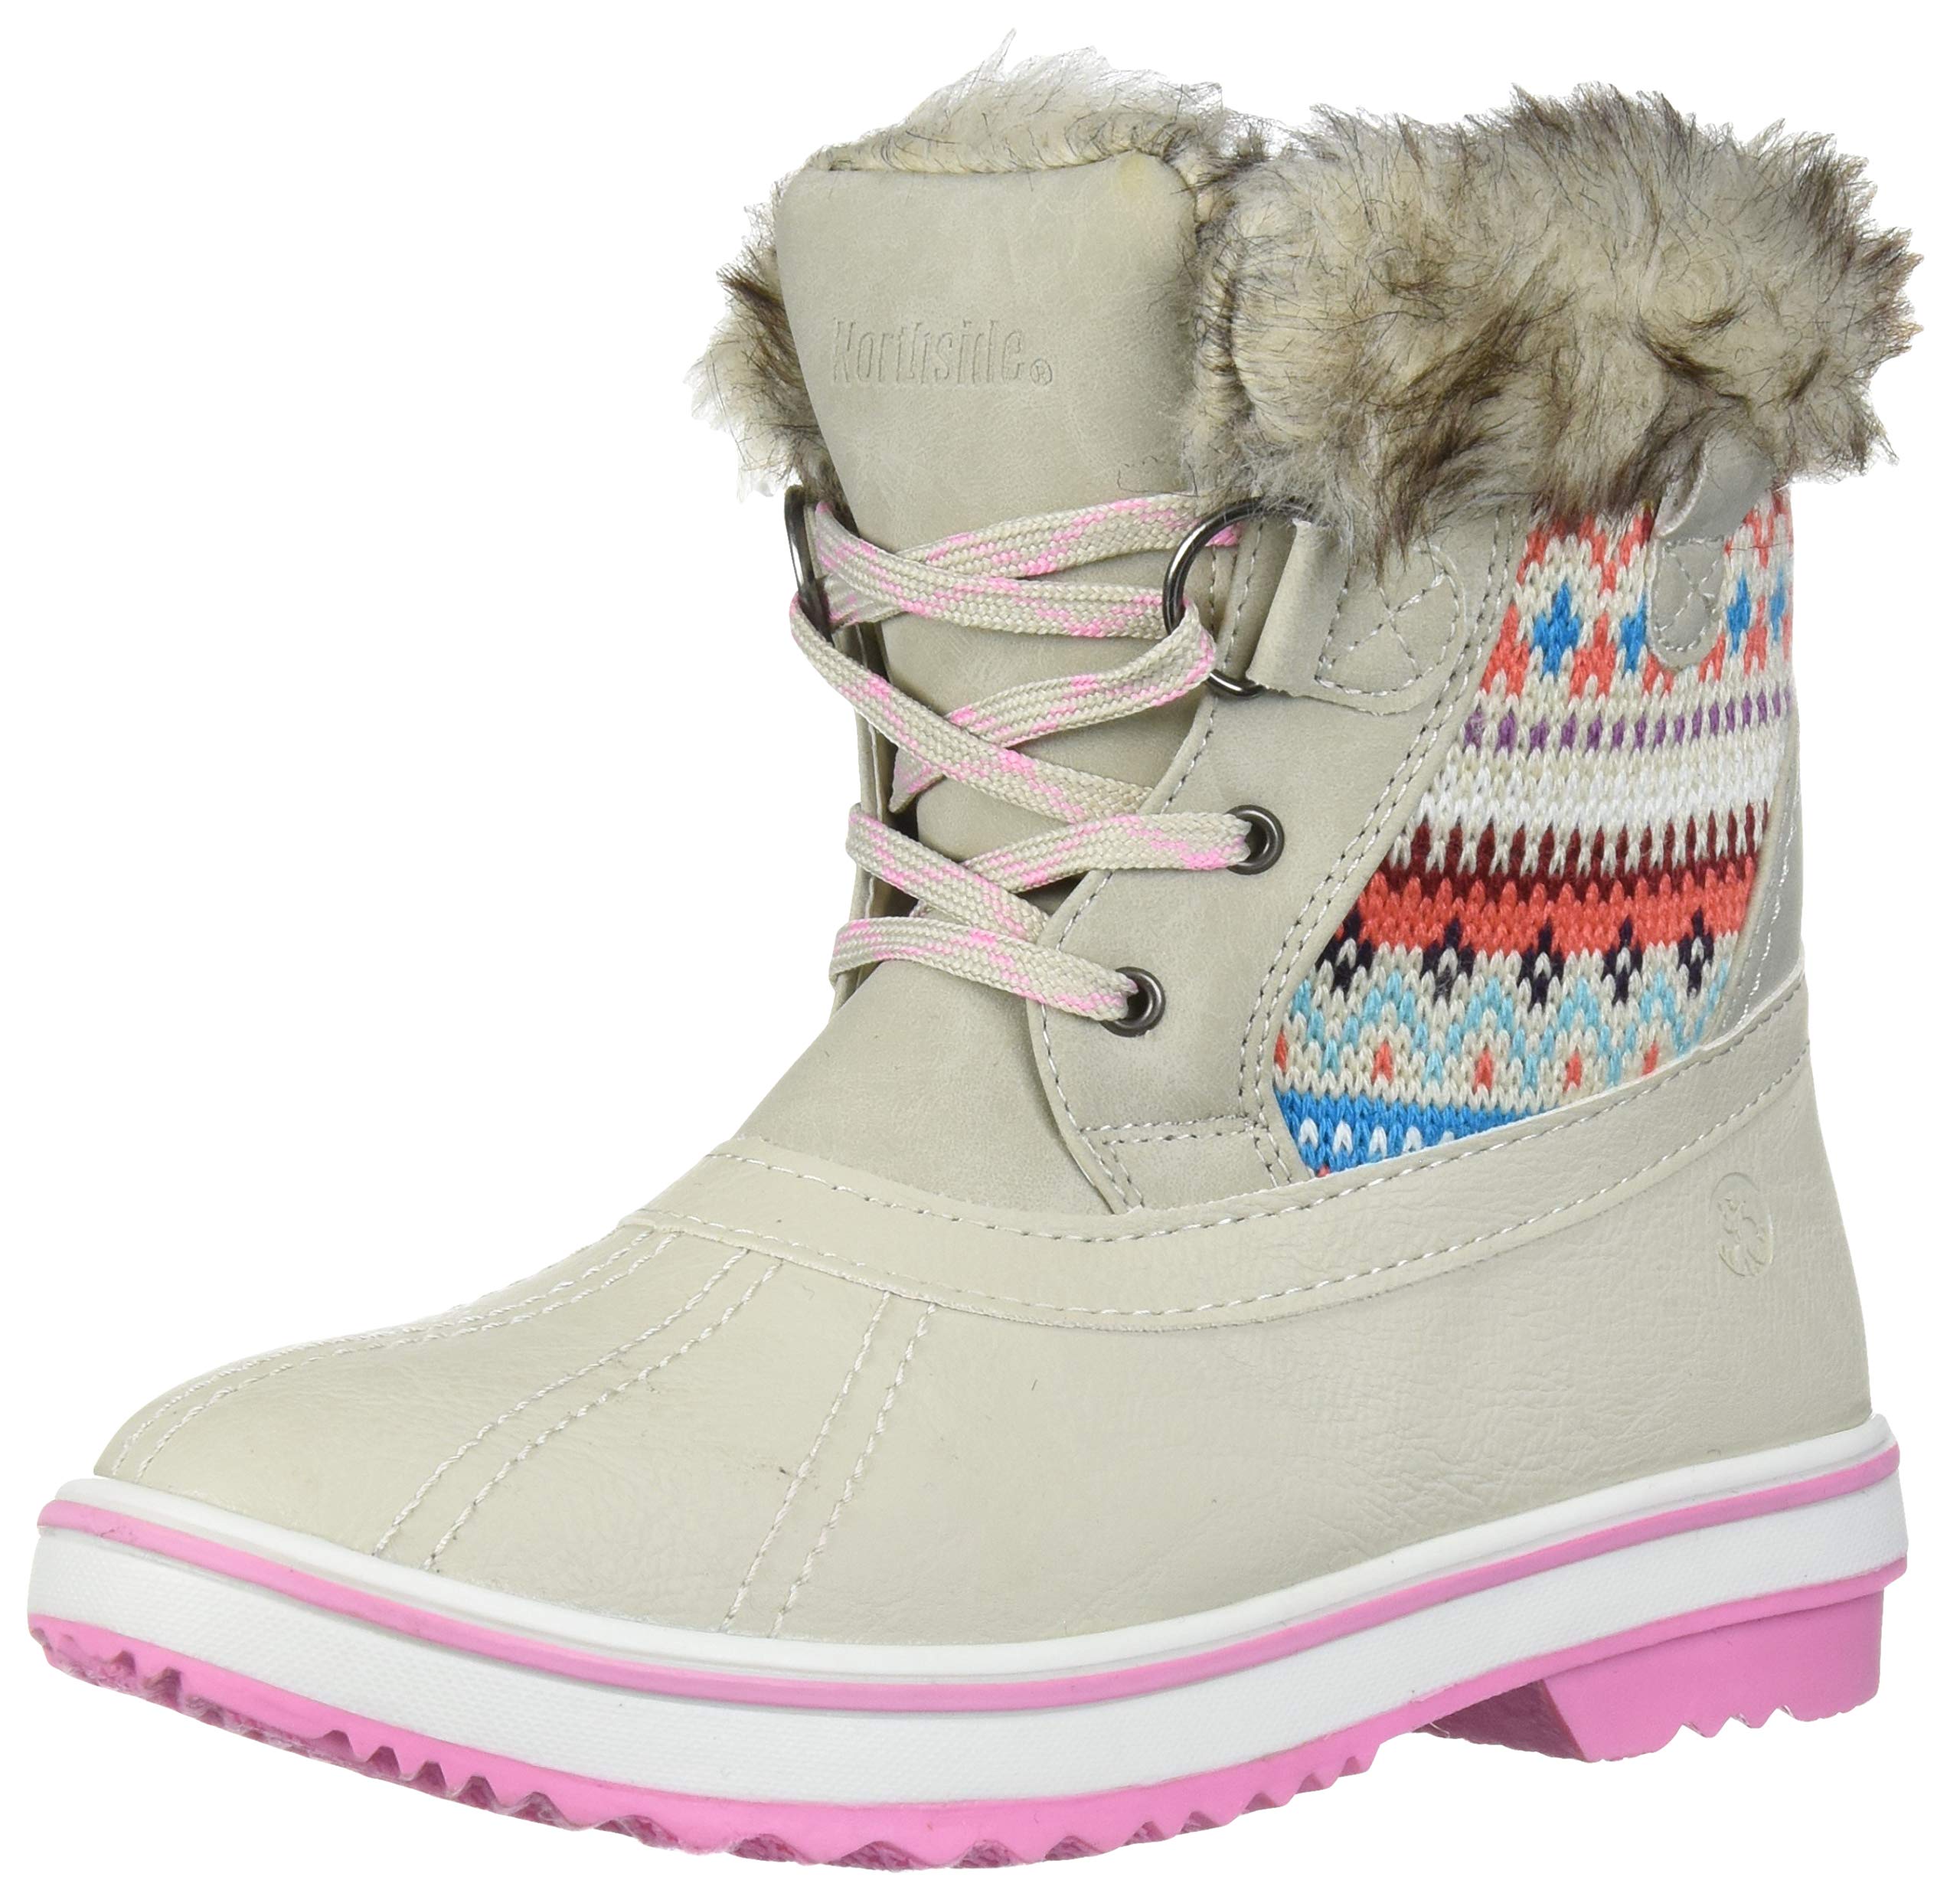 Northside Unisex-Child Brookelle Snow Boot